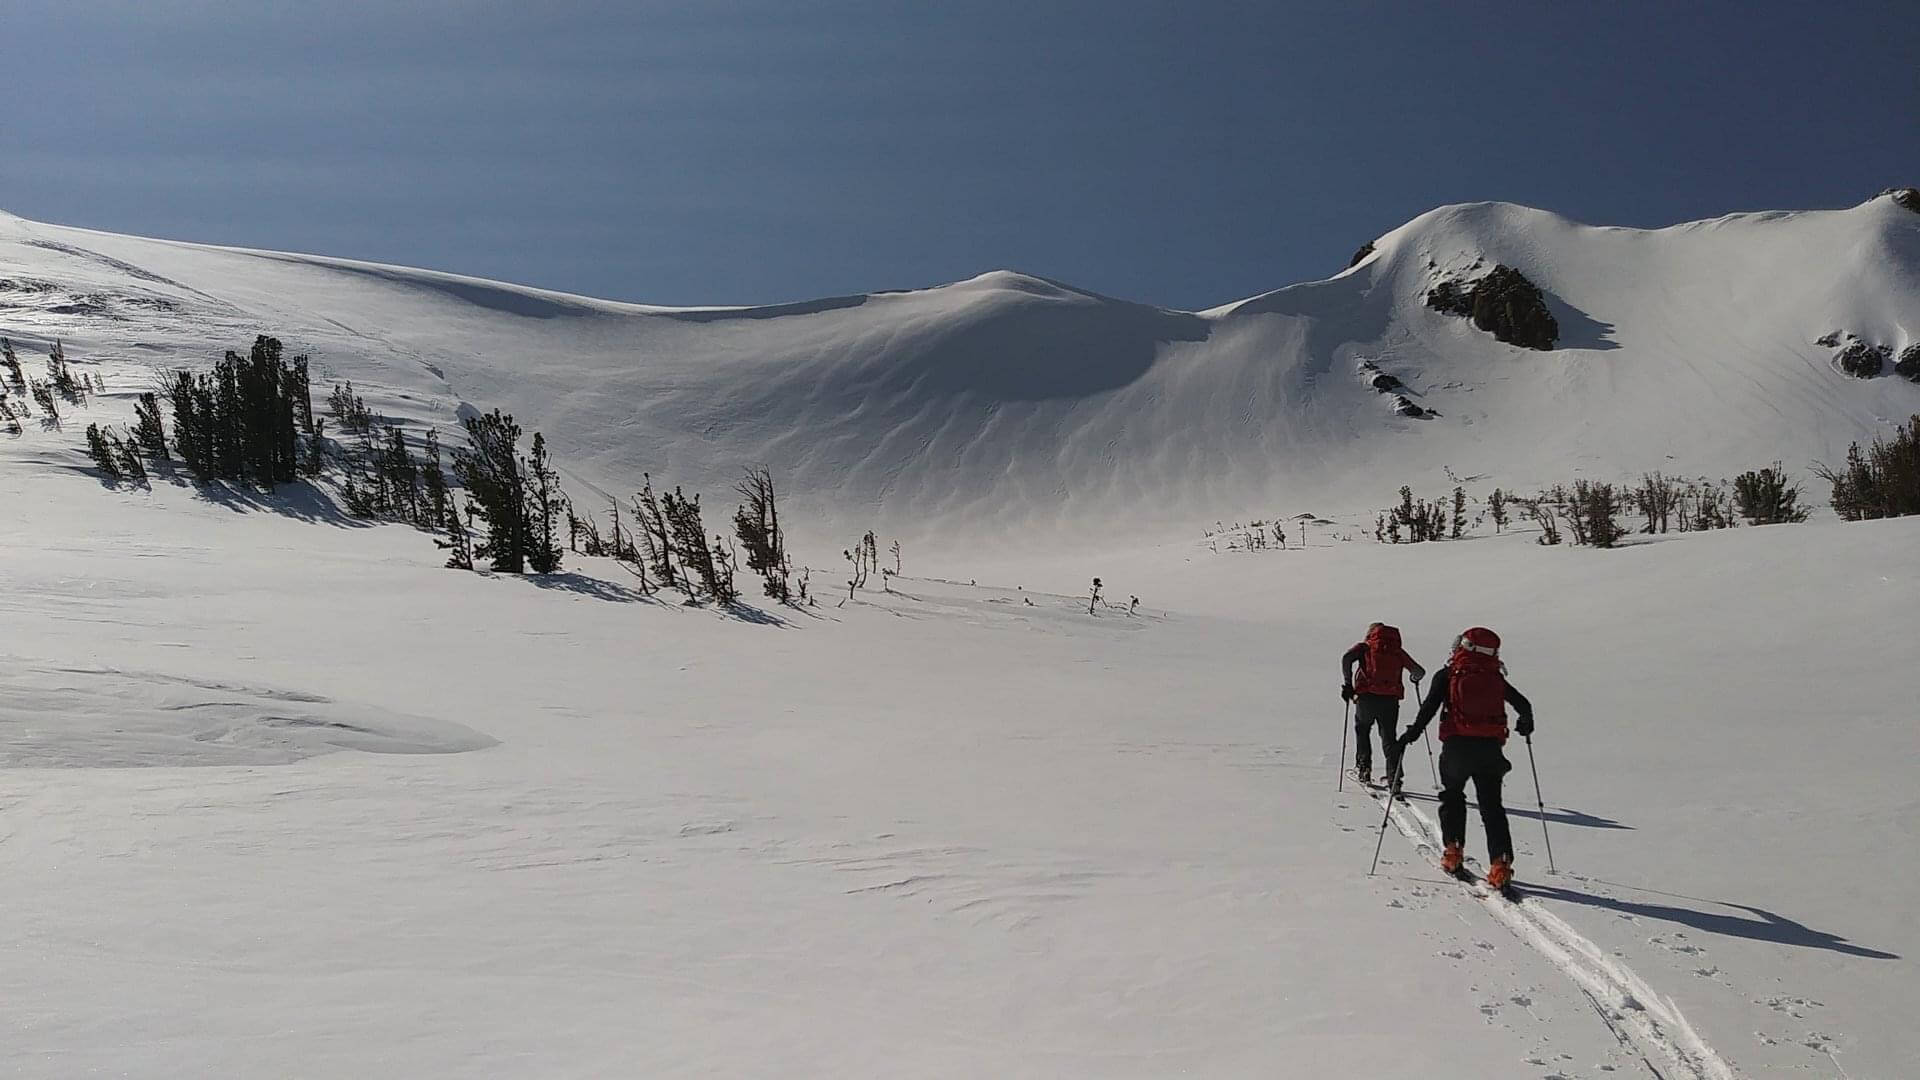 backcountry ski patrol in action in the high sierra